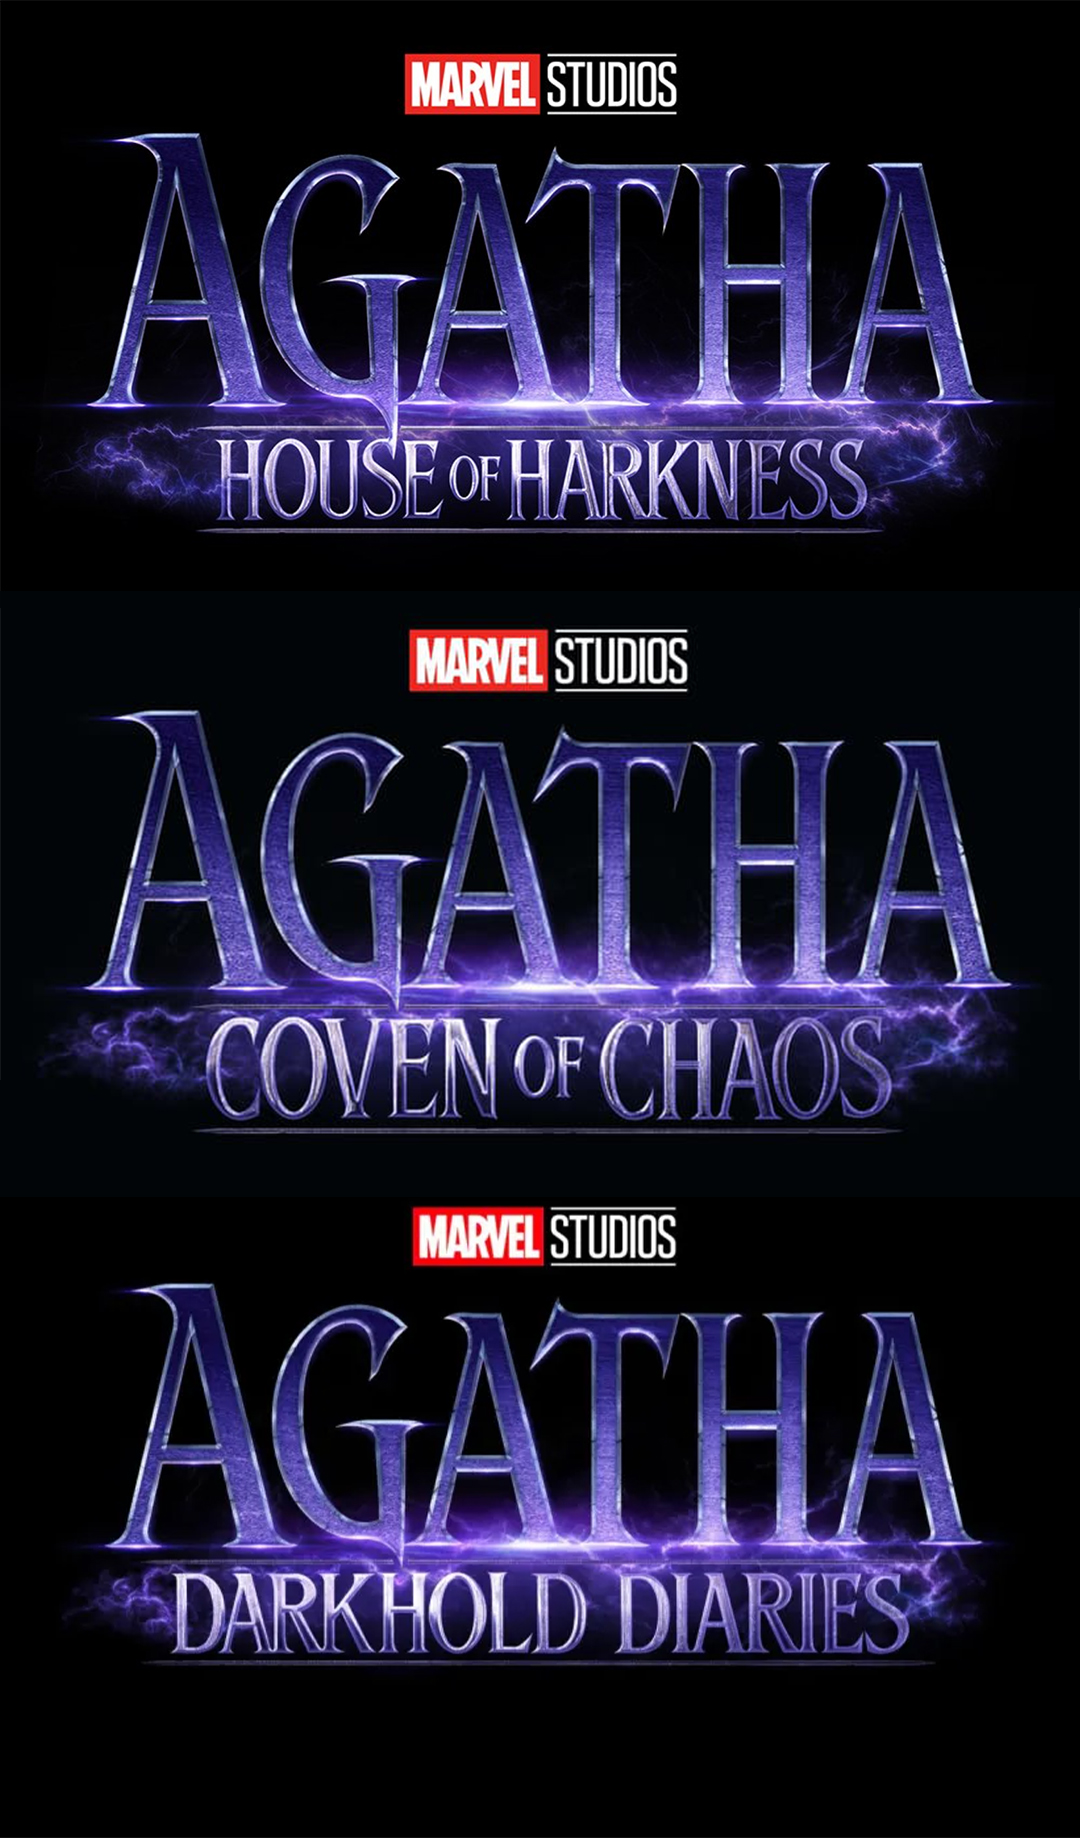 Marvel's Agatha series logos